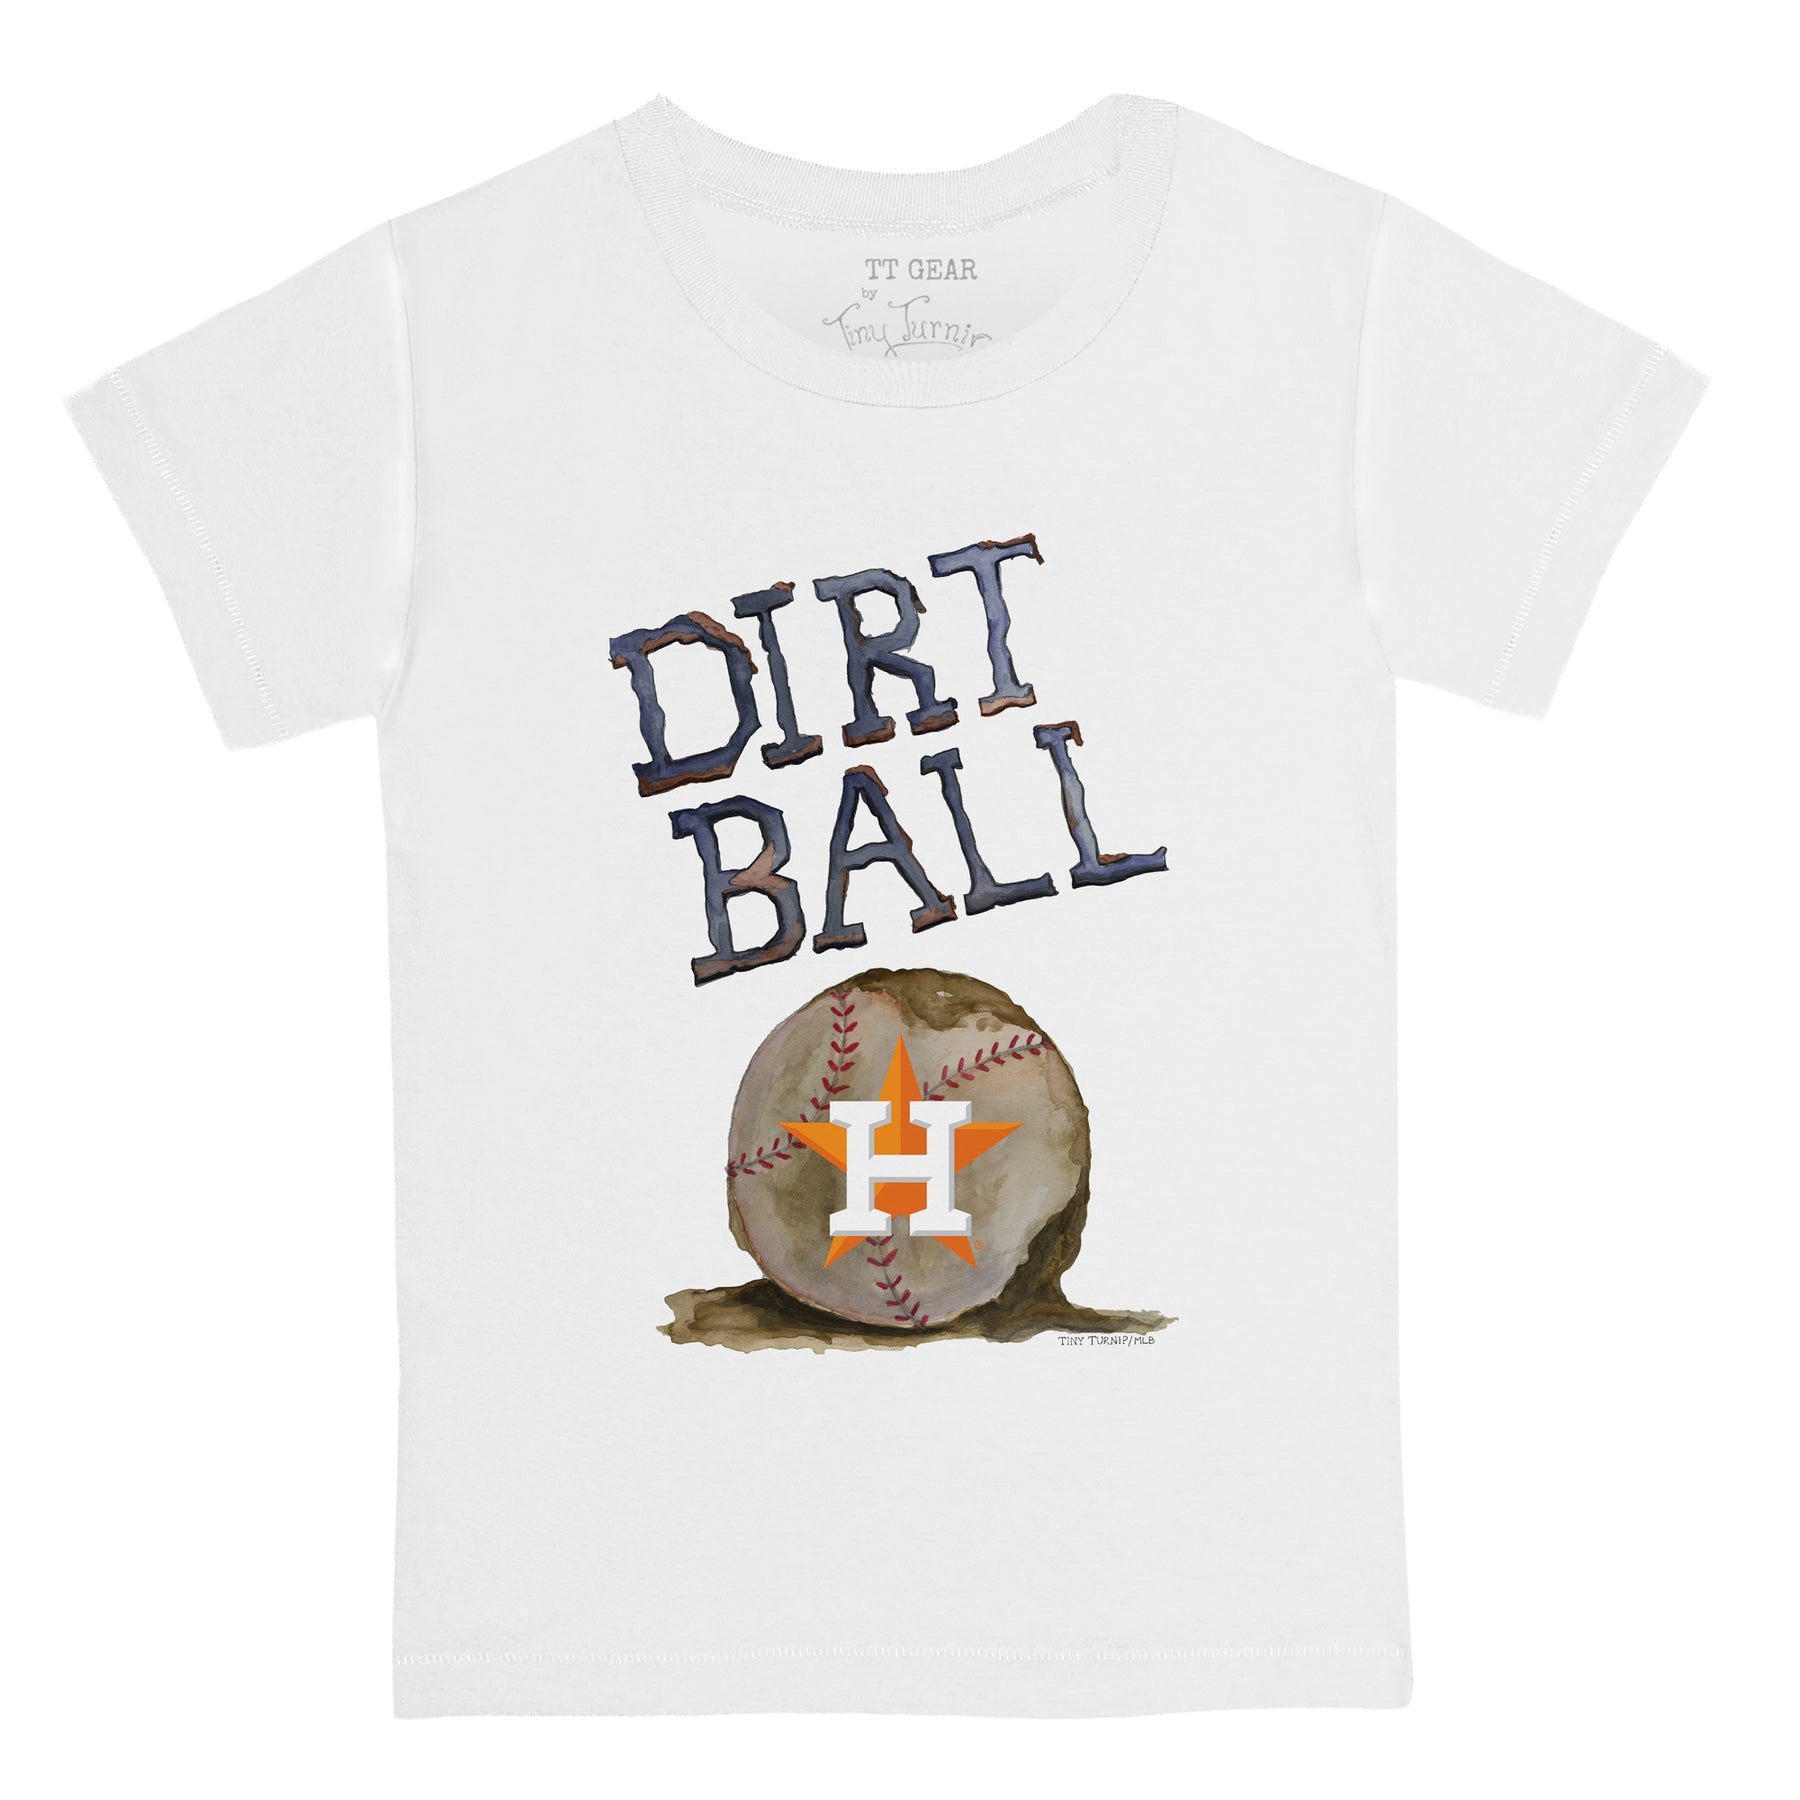 Houston Astros Dirt Ball Tee Shirt